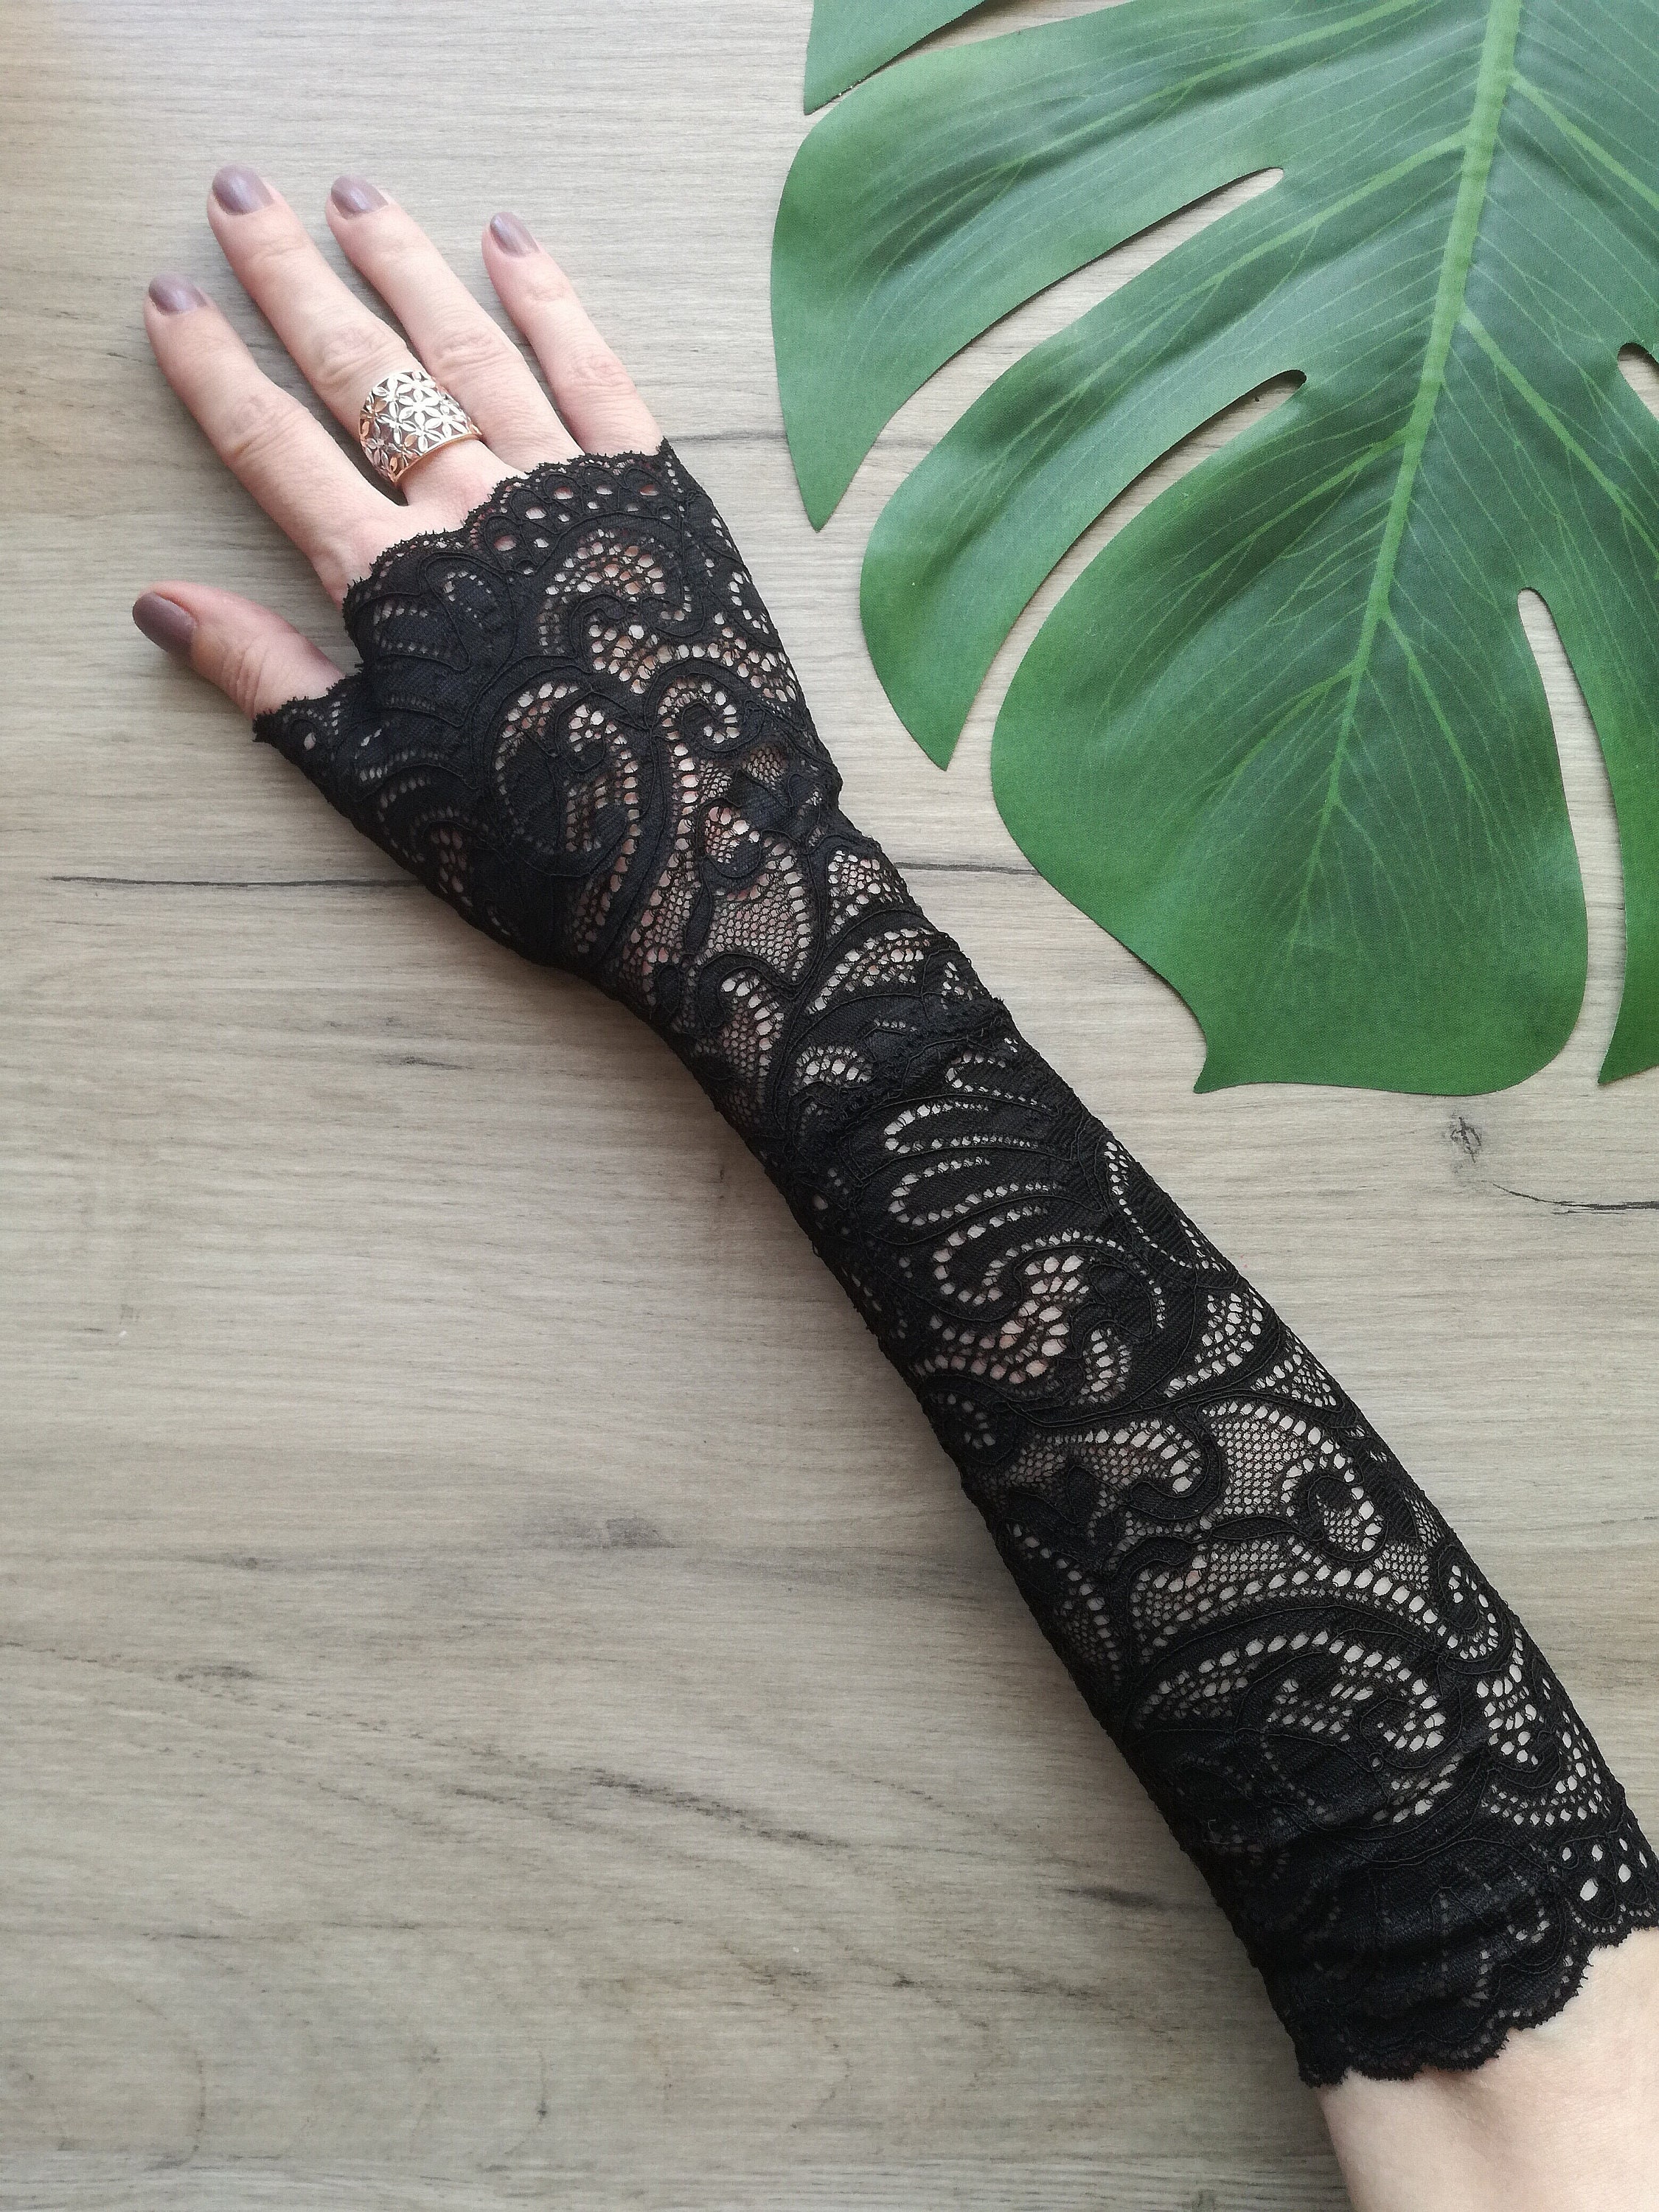 Long Lace gloves Black Lace Gloves Evening Gloves | Etsy